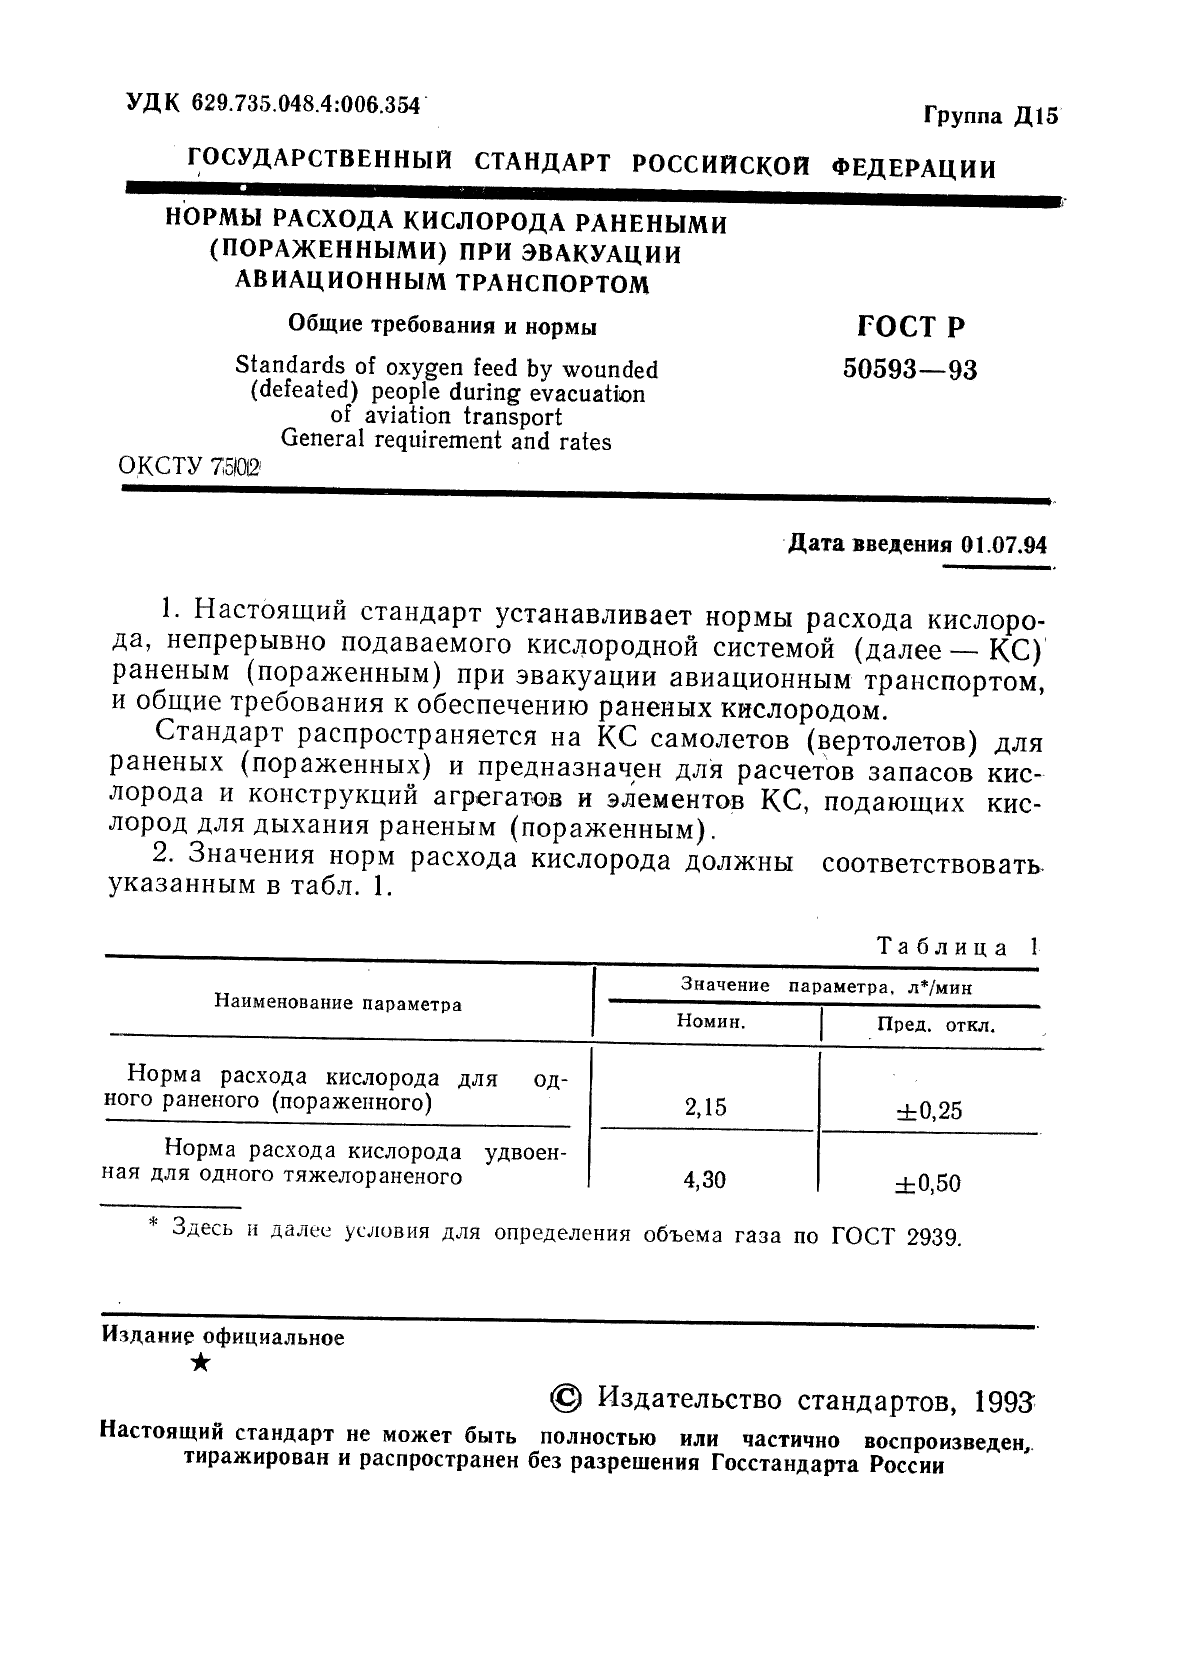 ГОСТ Р 50593-93